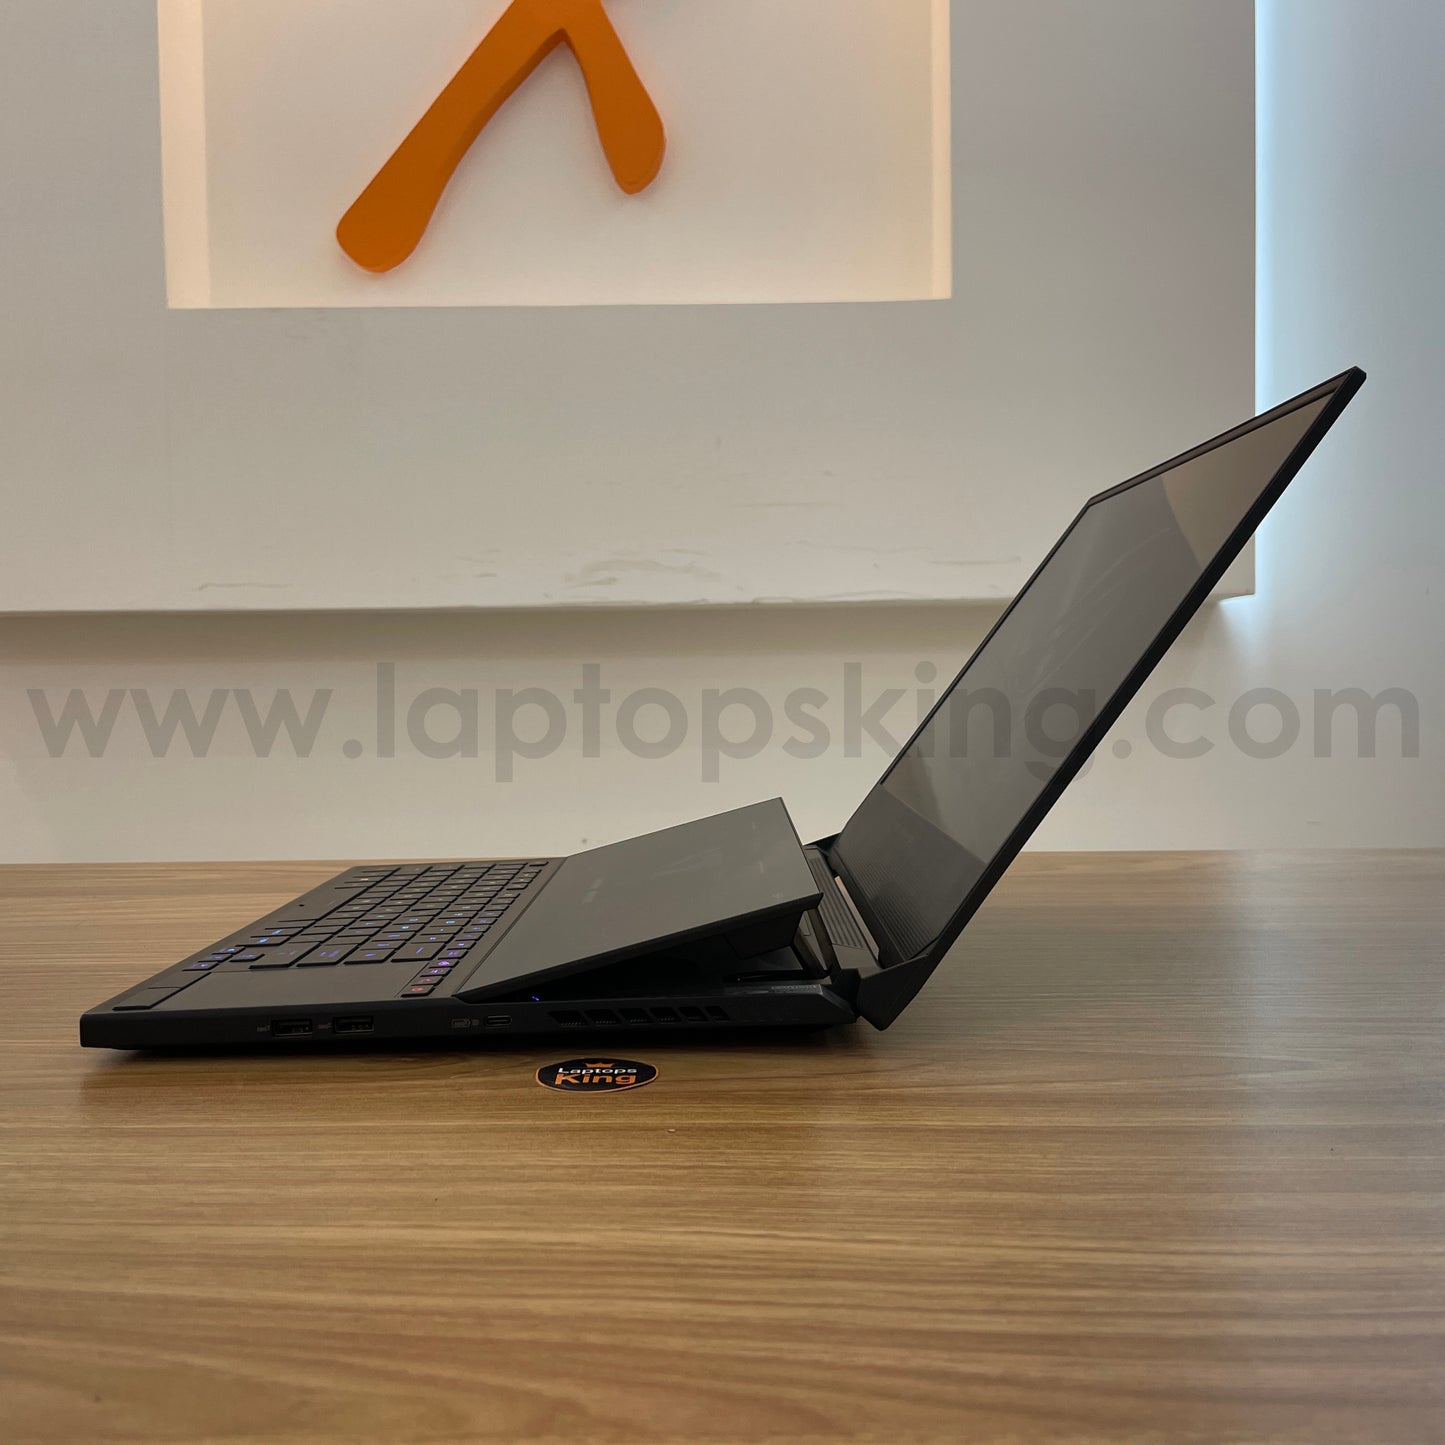 Asus Rog Zephyrus Duo 15 SE Ryzen 9 5900hx 300hz Rtx Dual-Screen Laptops (New OB)